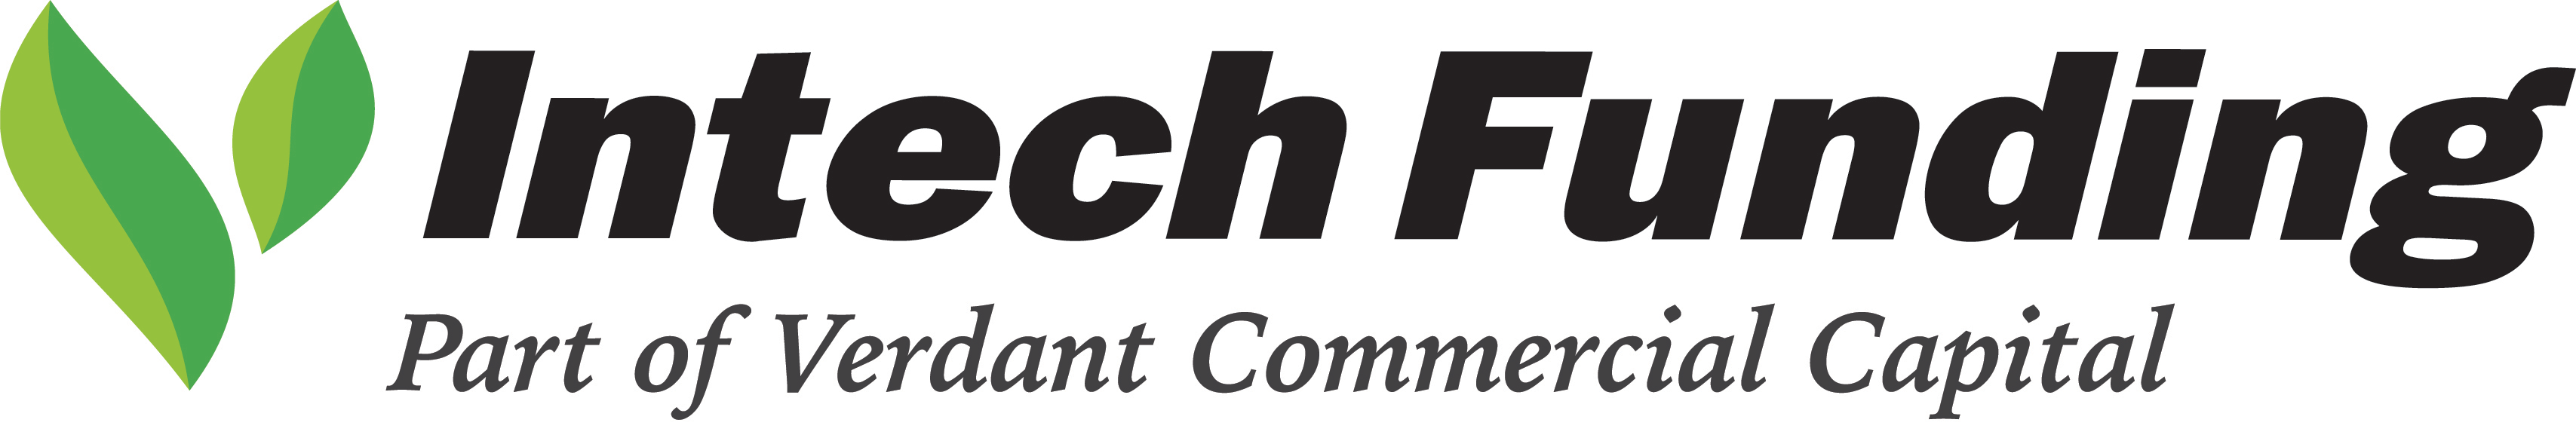 Intech Funding logo